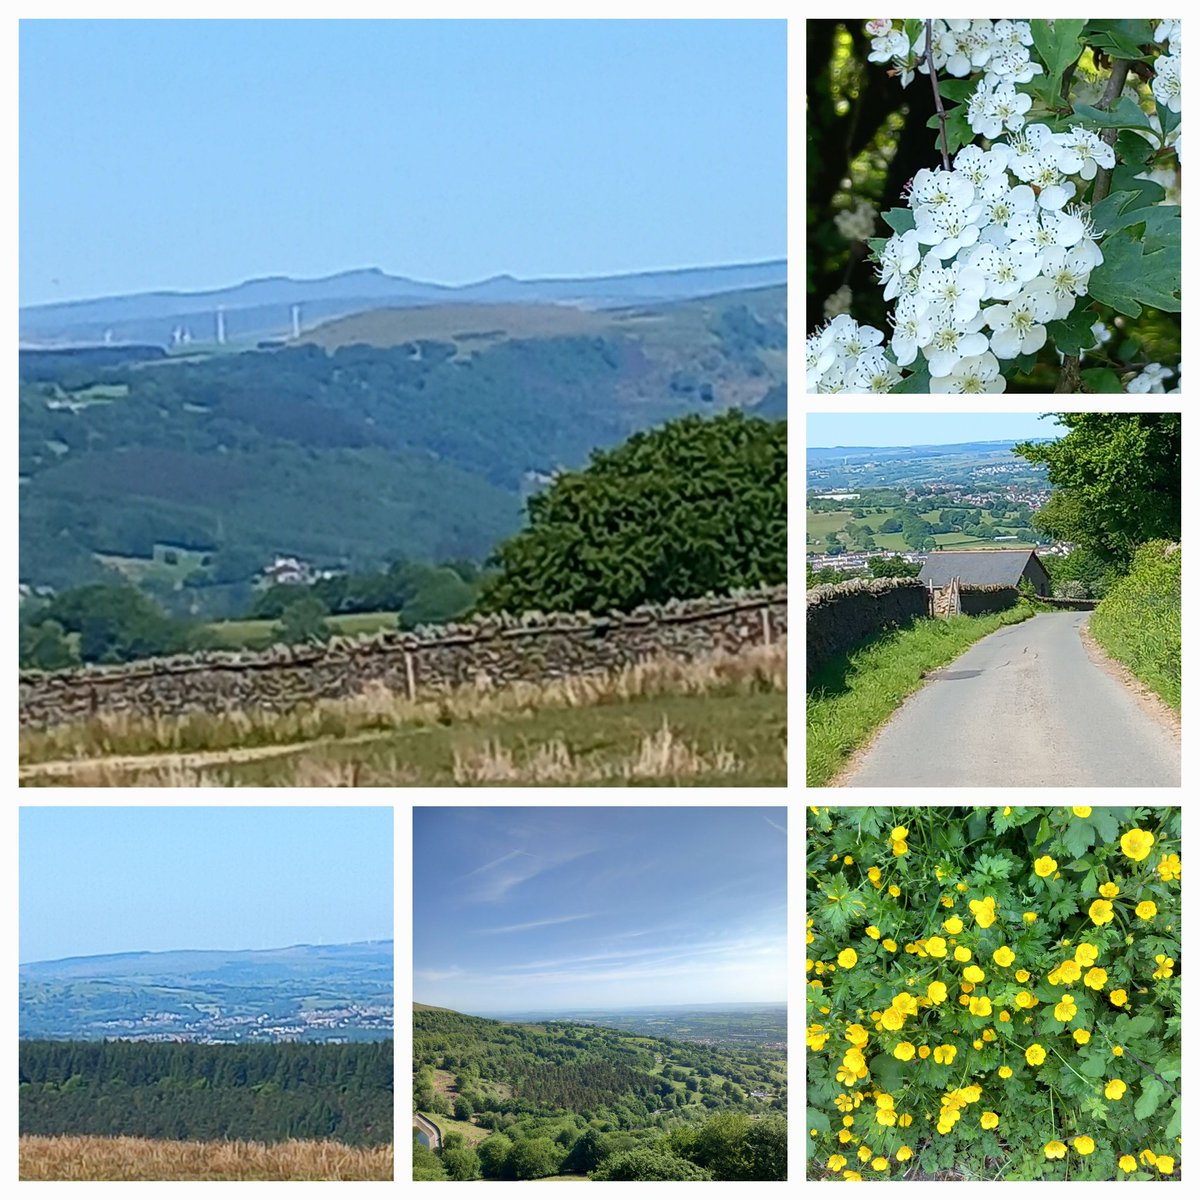 Few pics from yesterday's walk - Penyfan in the distance 😁⛰️🌺 #GardeningTwitter #flowers #mountains #walking